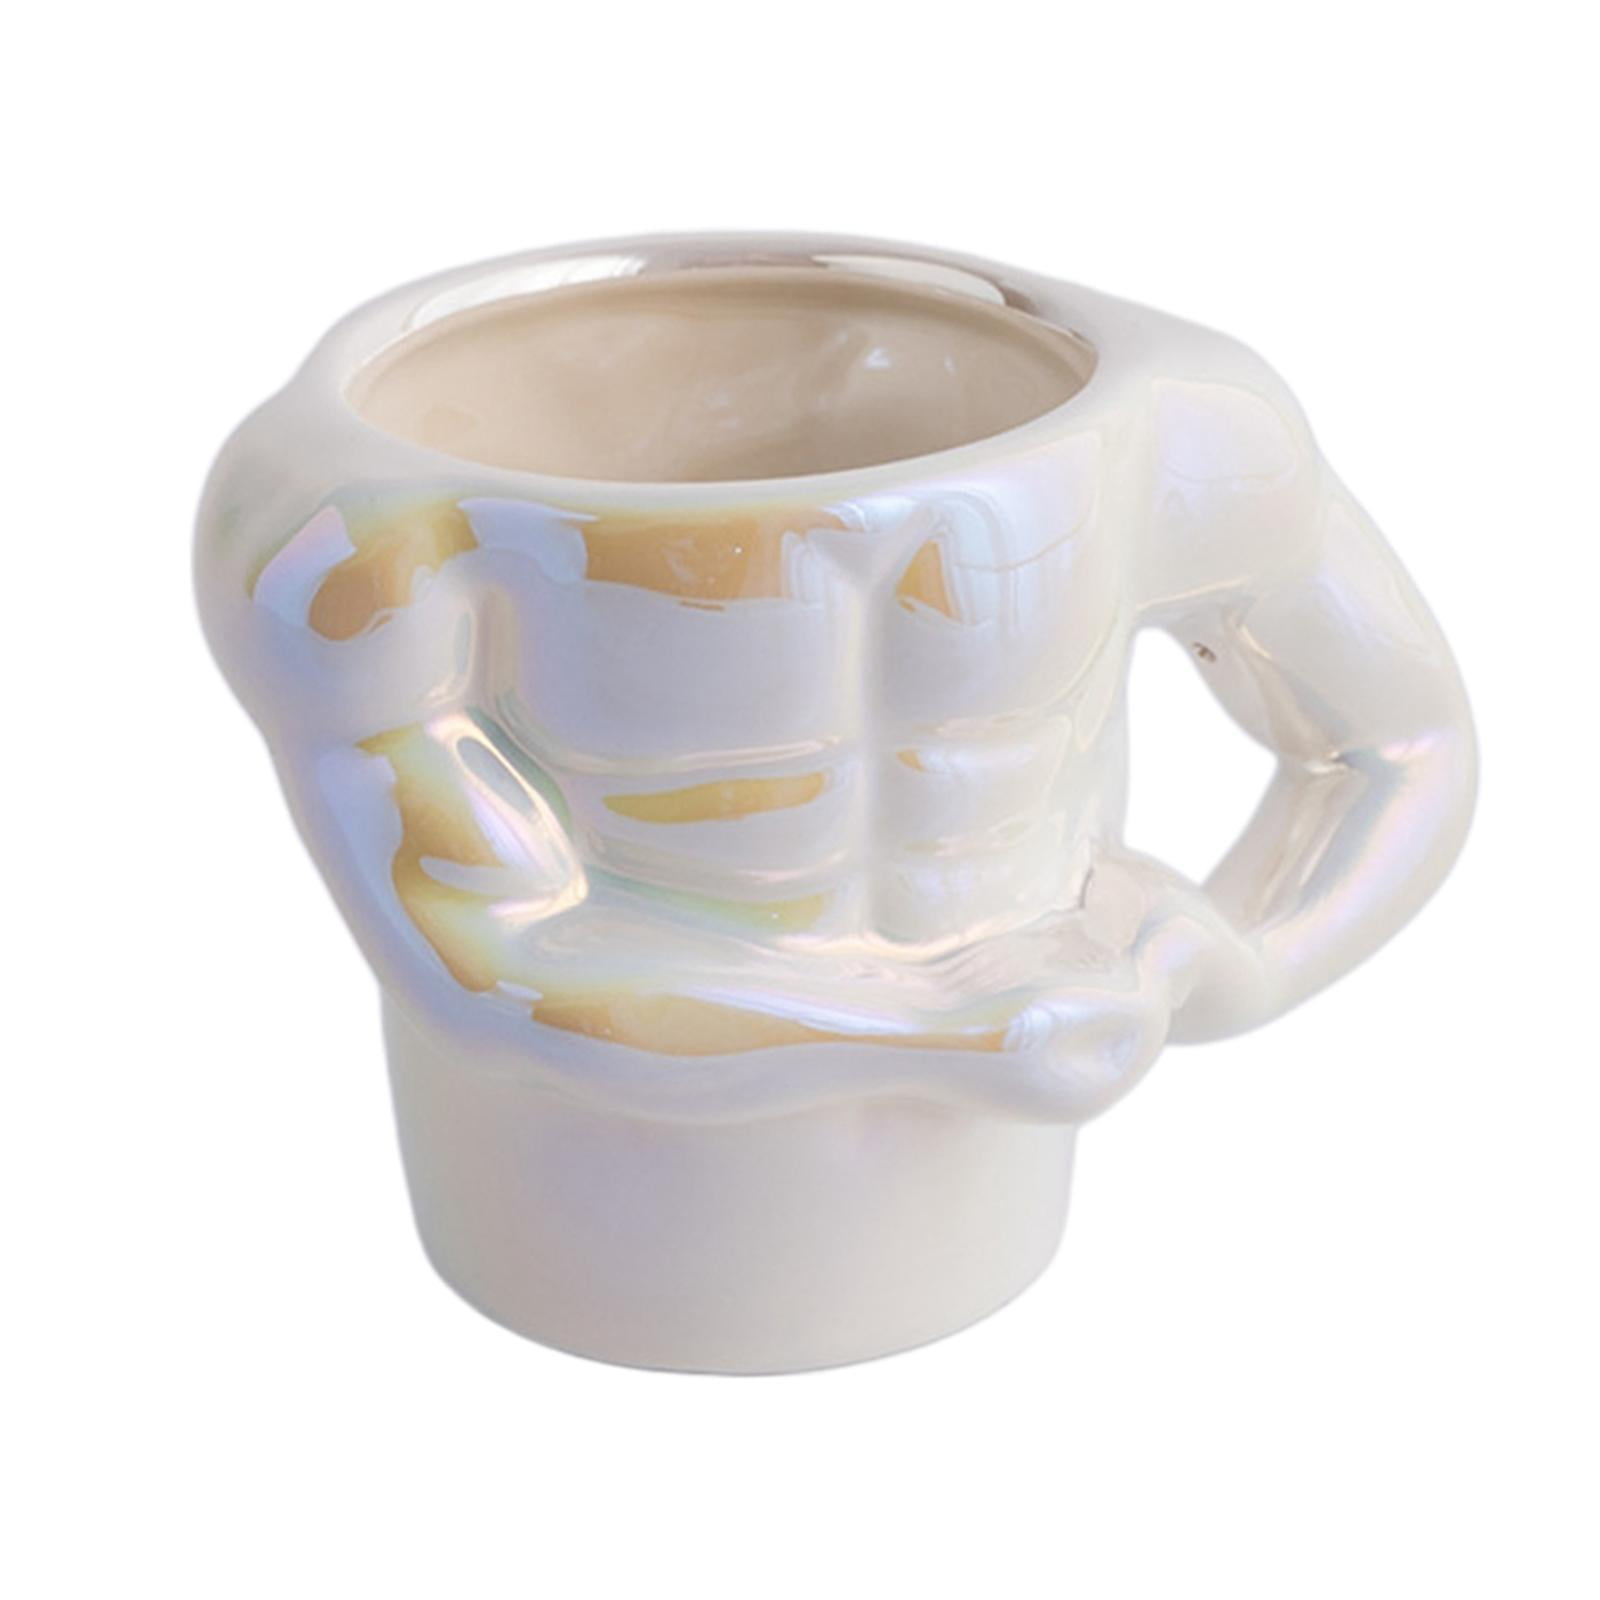 Cup Ceramic Drink Mug Creative Craft Elephant Decorative Bar Juice